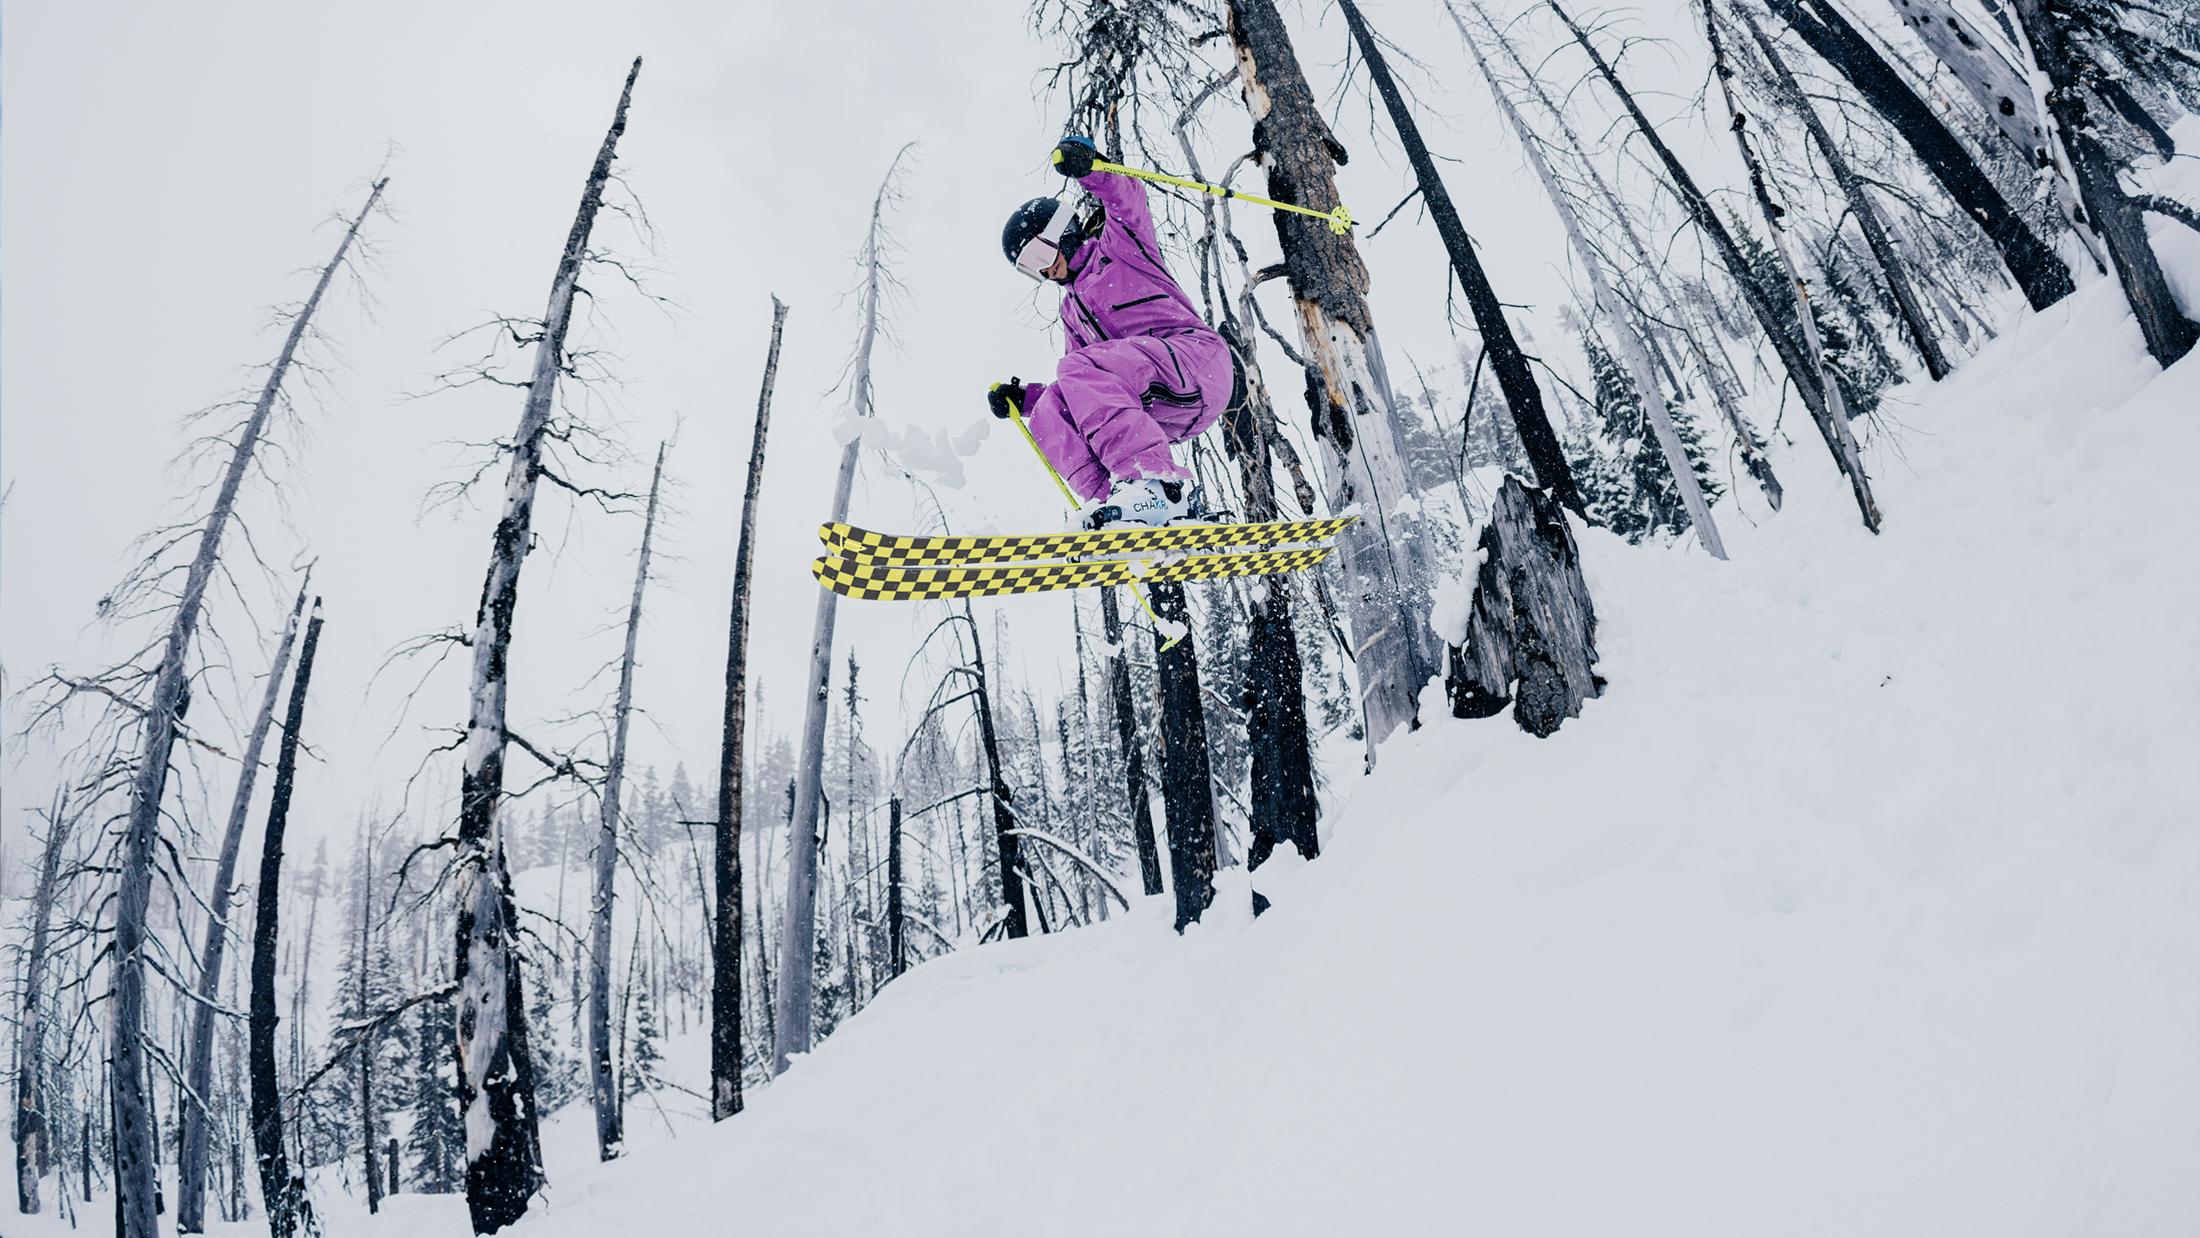 The Escalator "DESTROYER" Jimbo Phillips x J Collab Limited Edition Ski Shredding Image